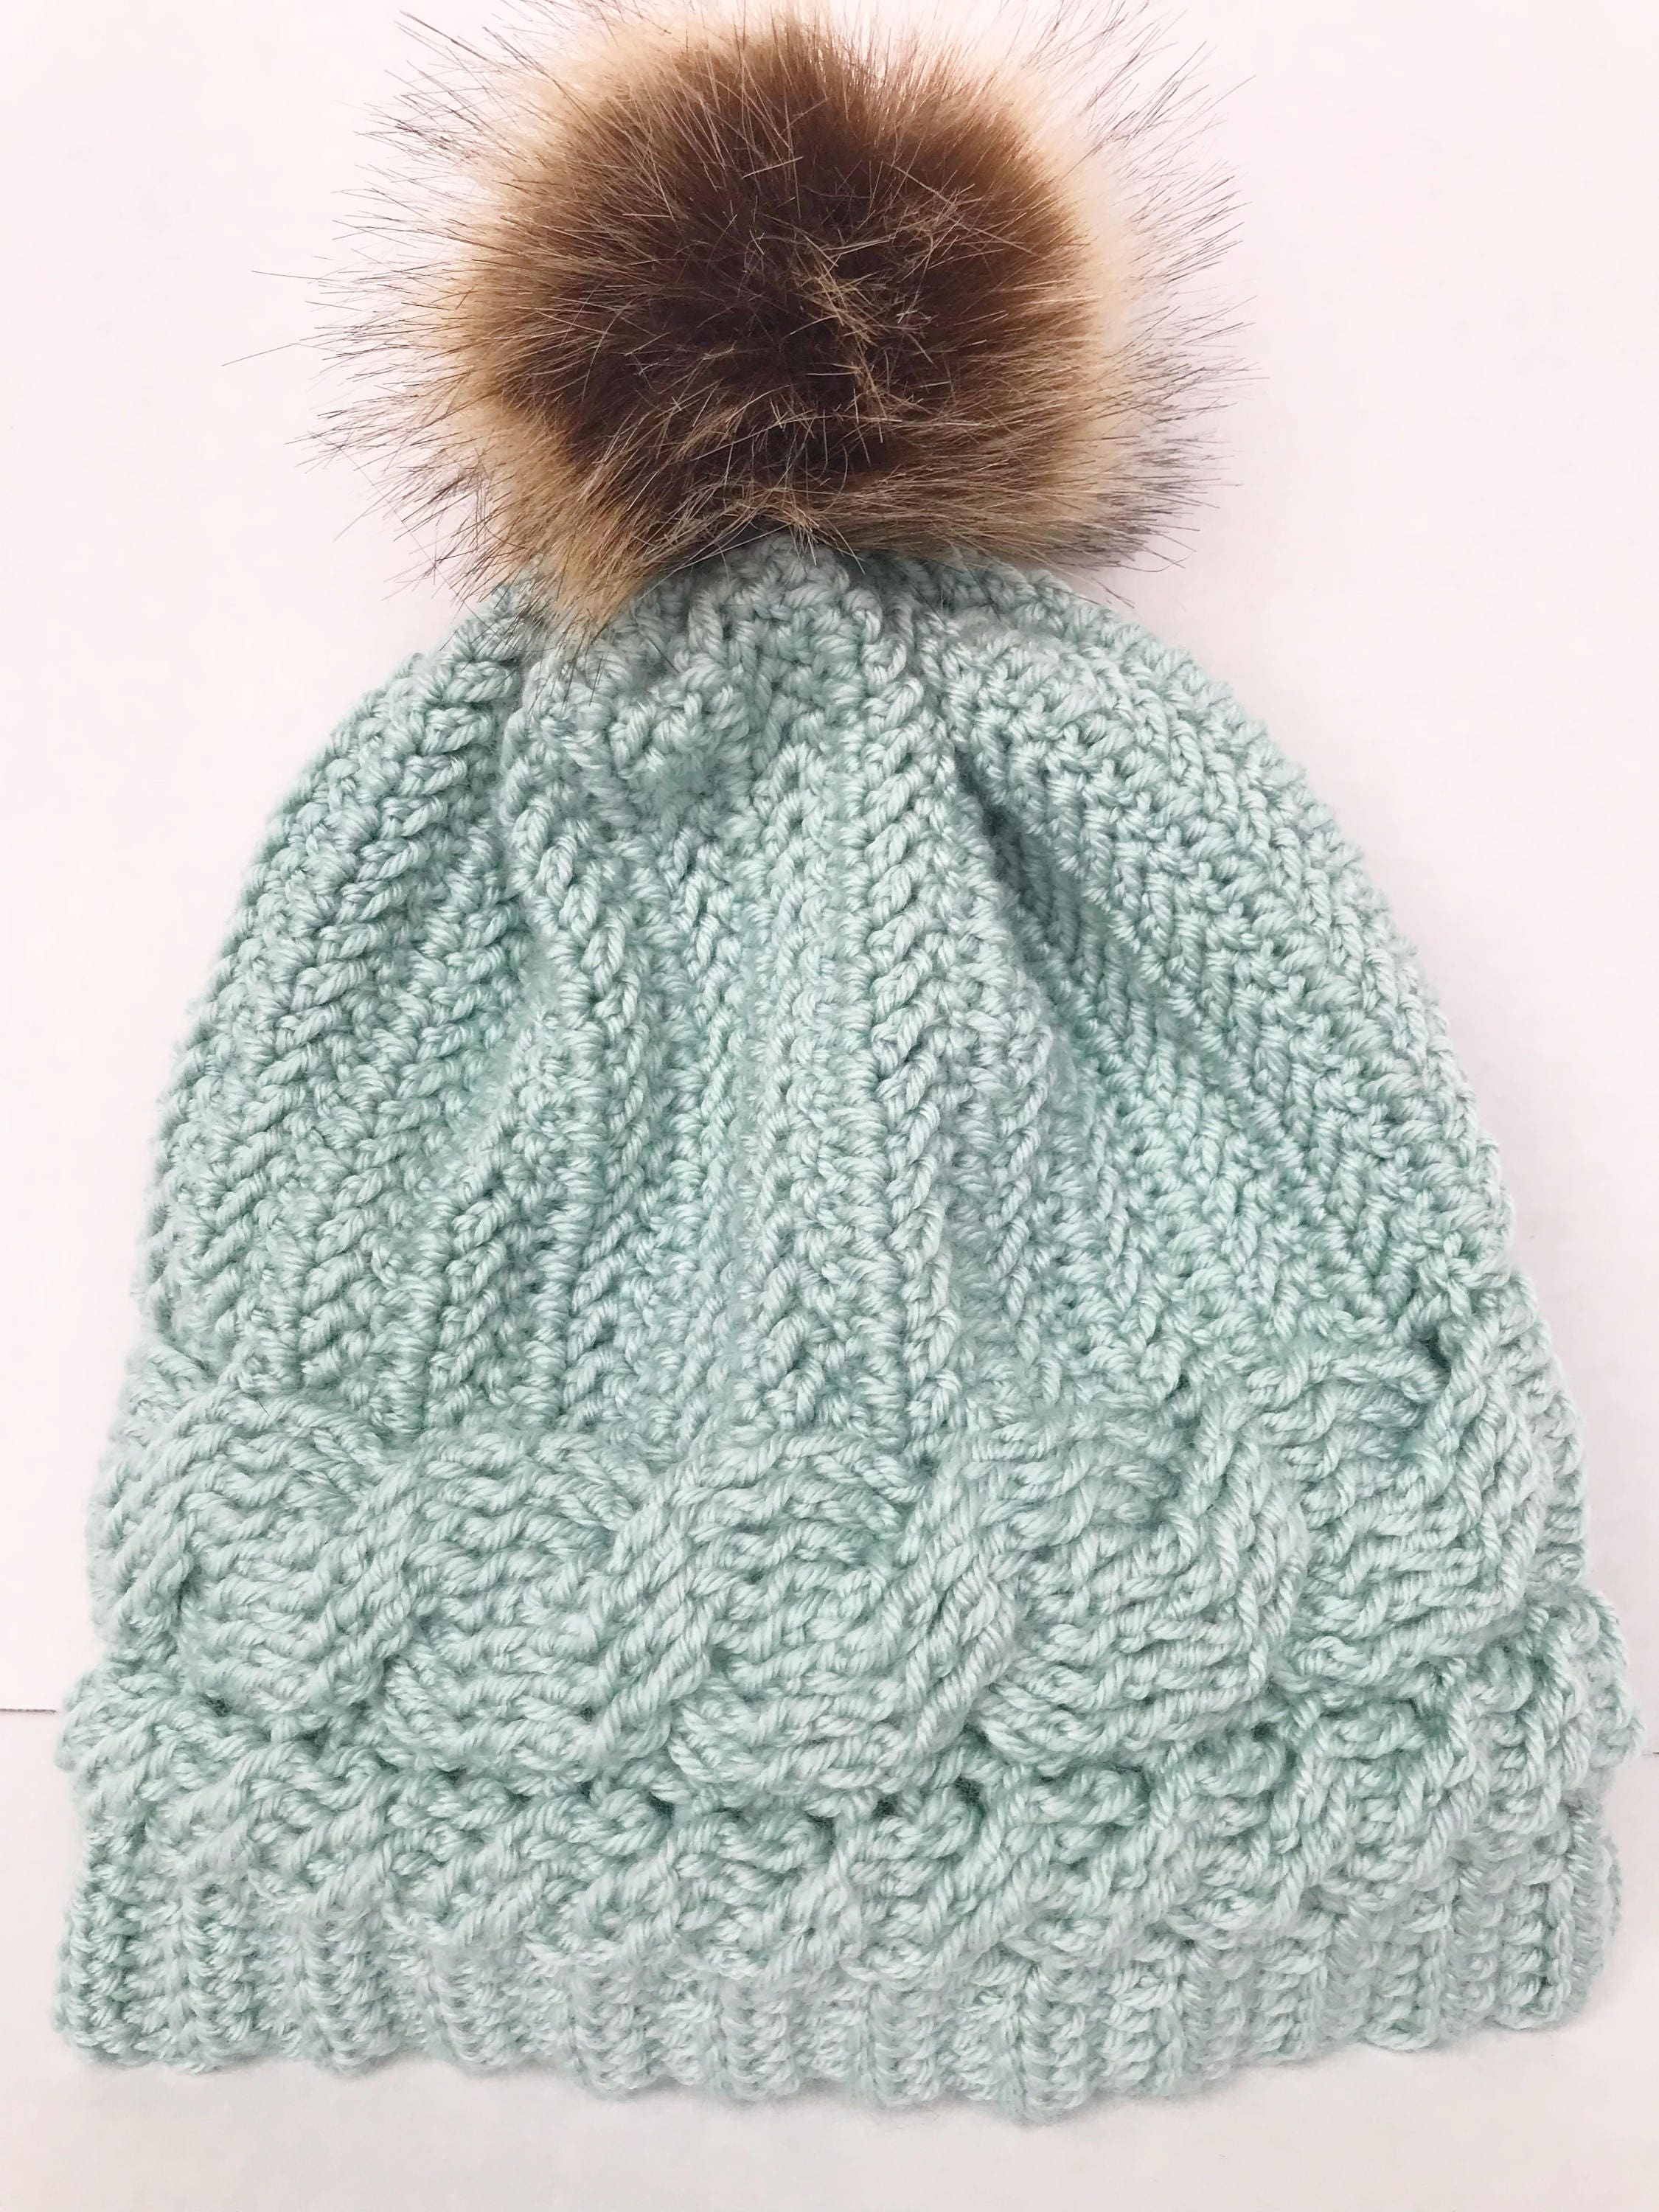 Charlotte Cable Crochet Hat - Etsy